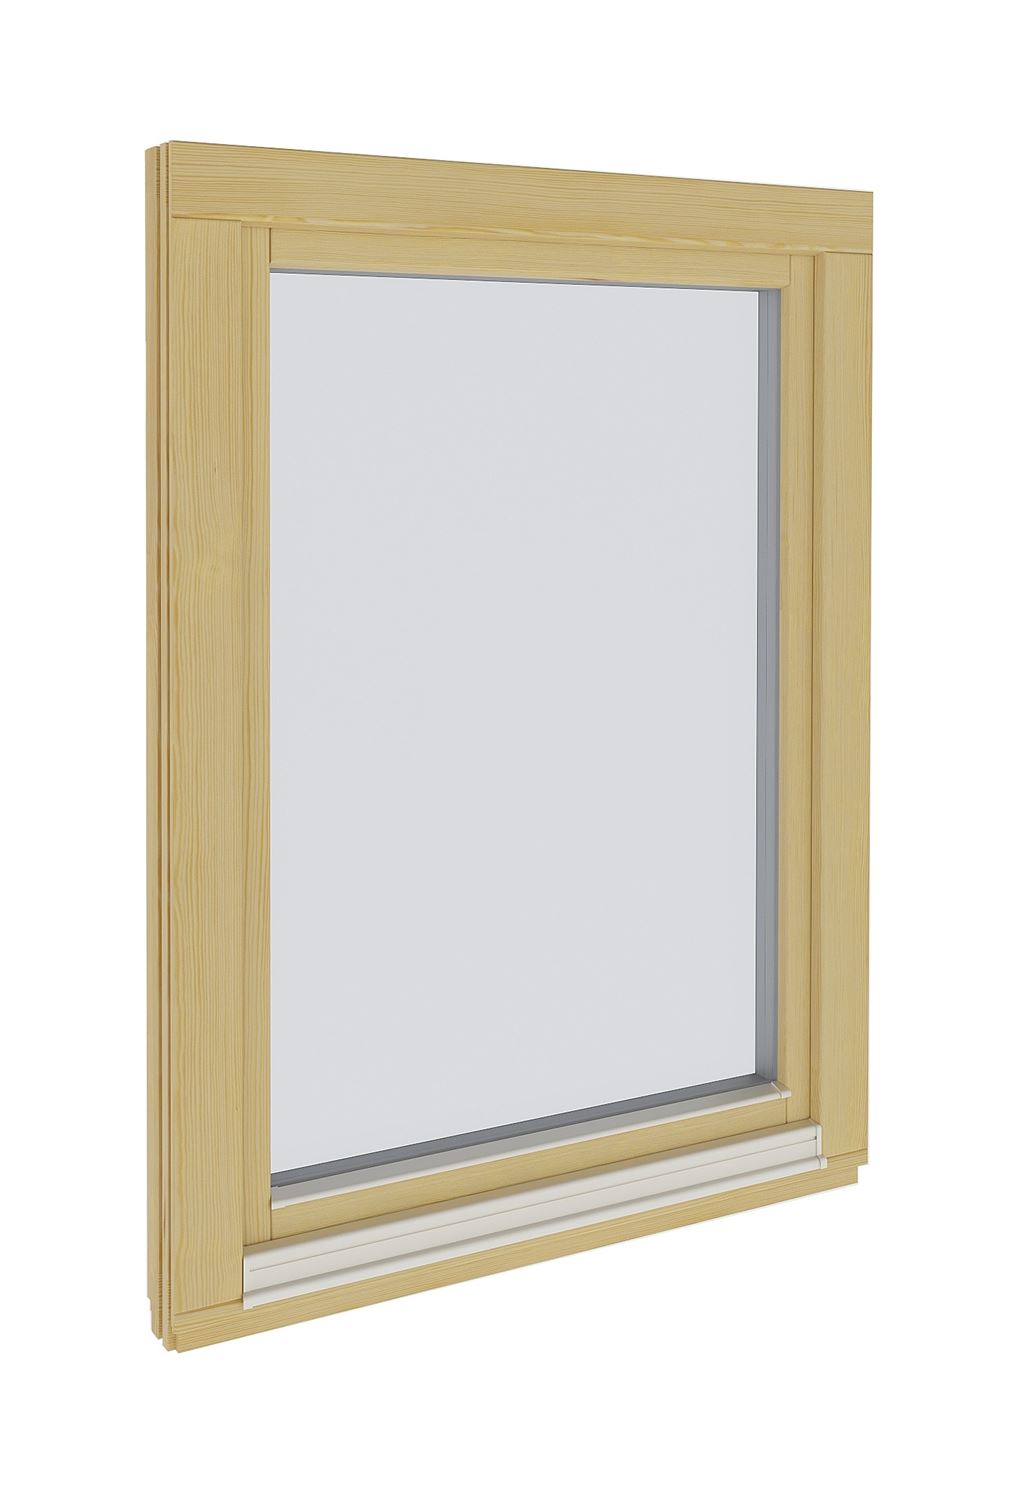 Timber windows CLASSIC PRO WARM 78